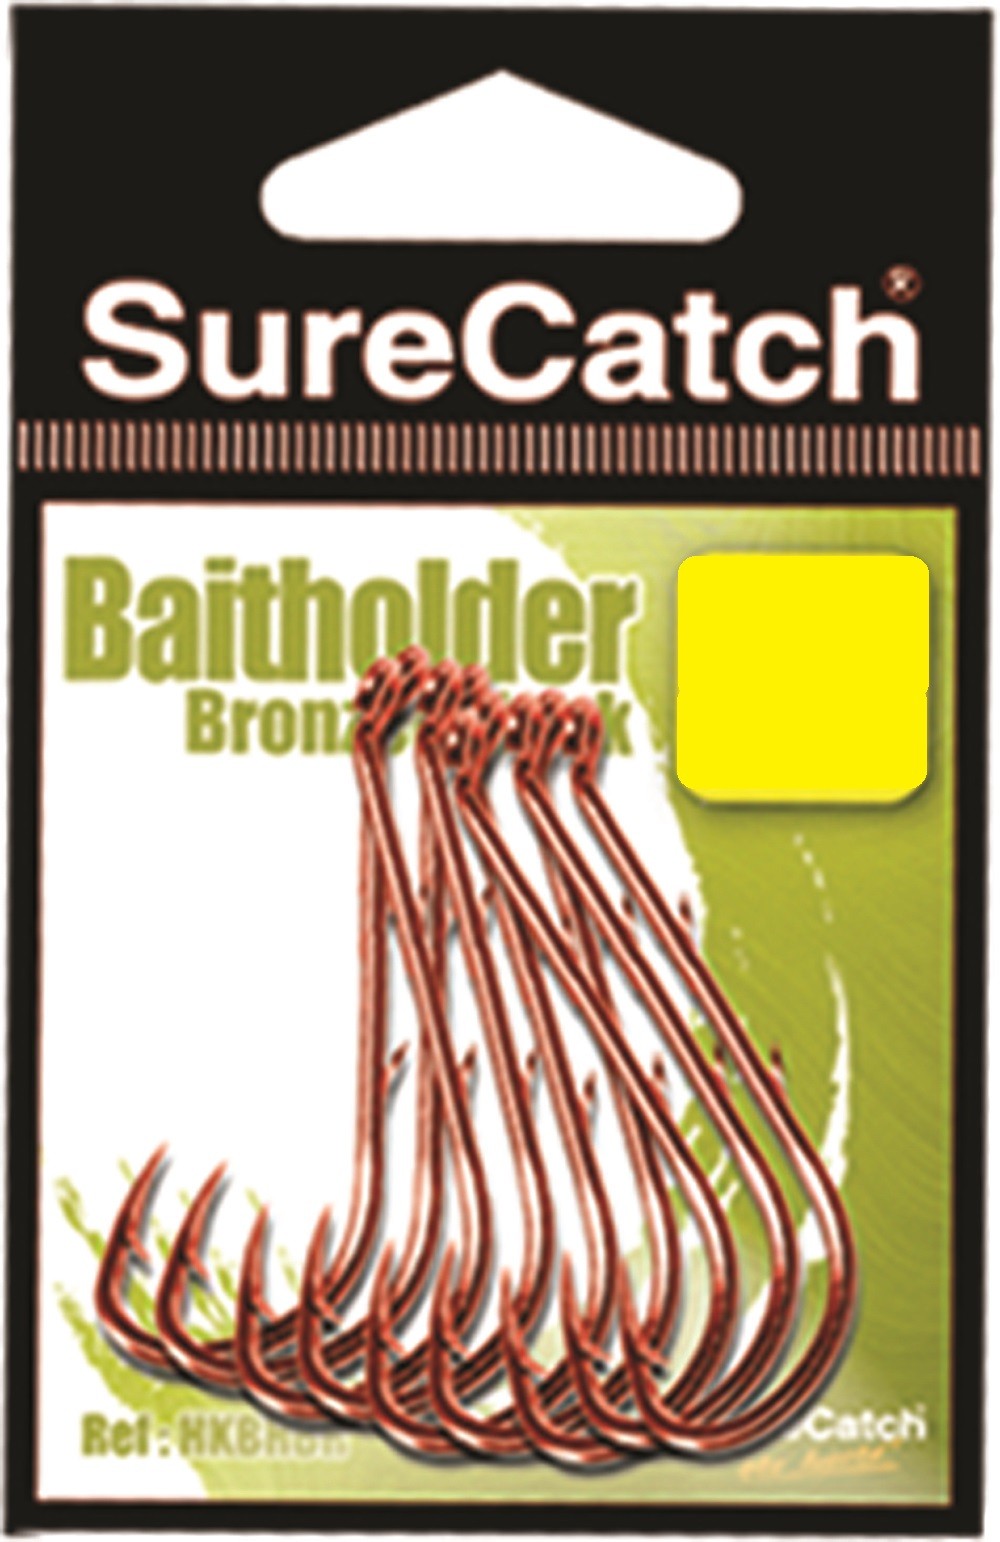 Sure Catch Bronze Baitholder Hook (7 per Pack) - Size 2/0